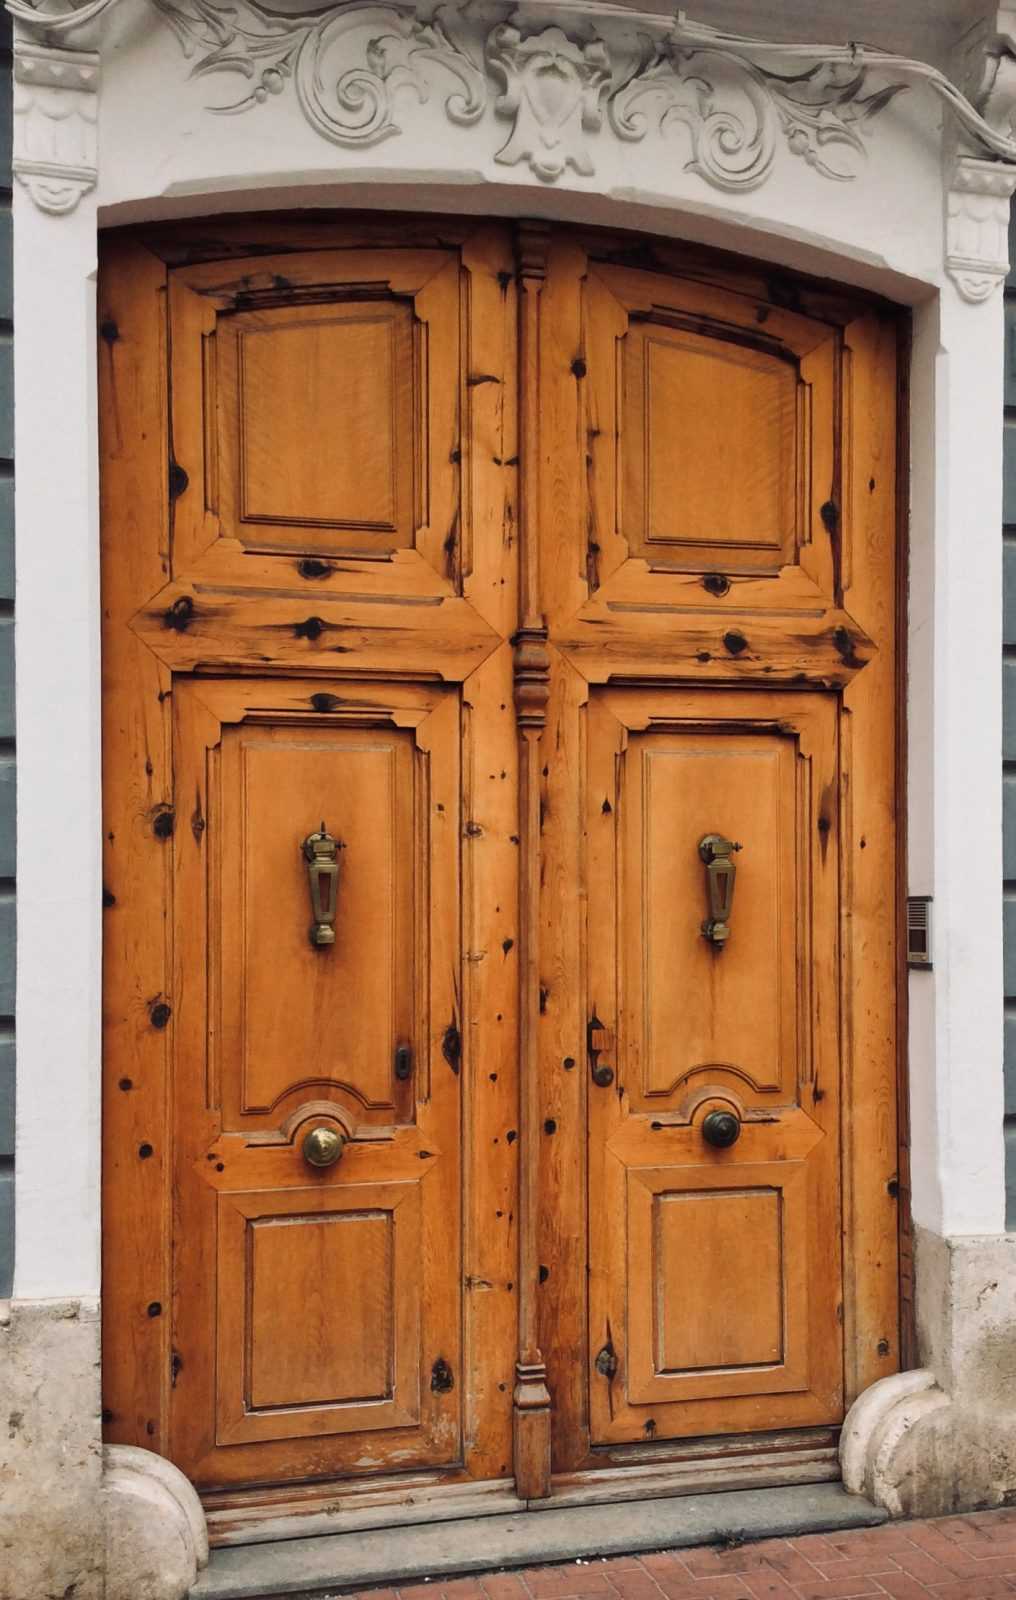 Carved wooden door in Oliva, Valencia, Spain